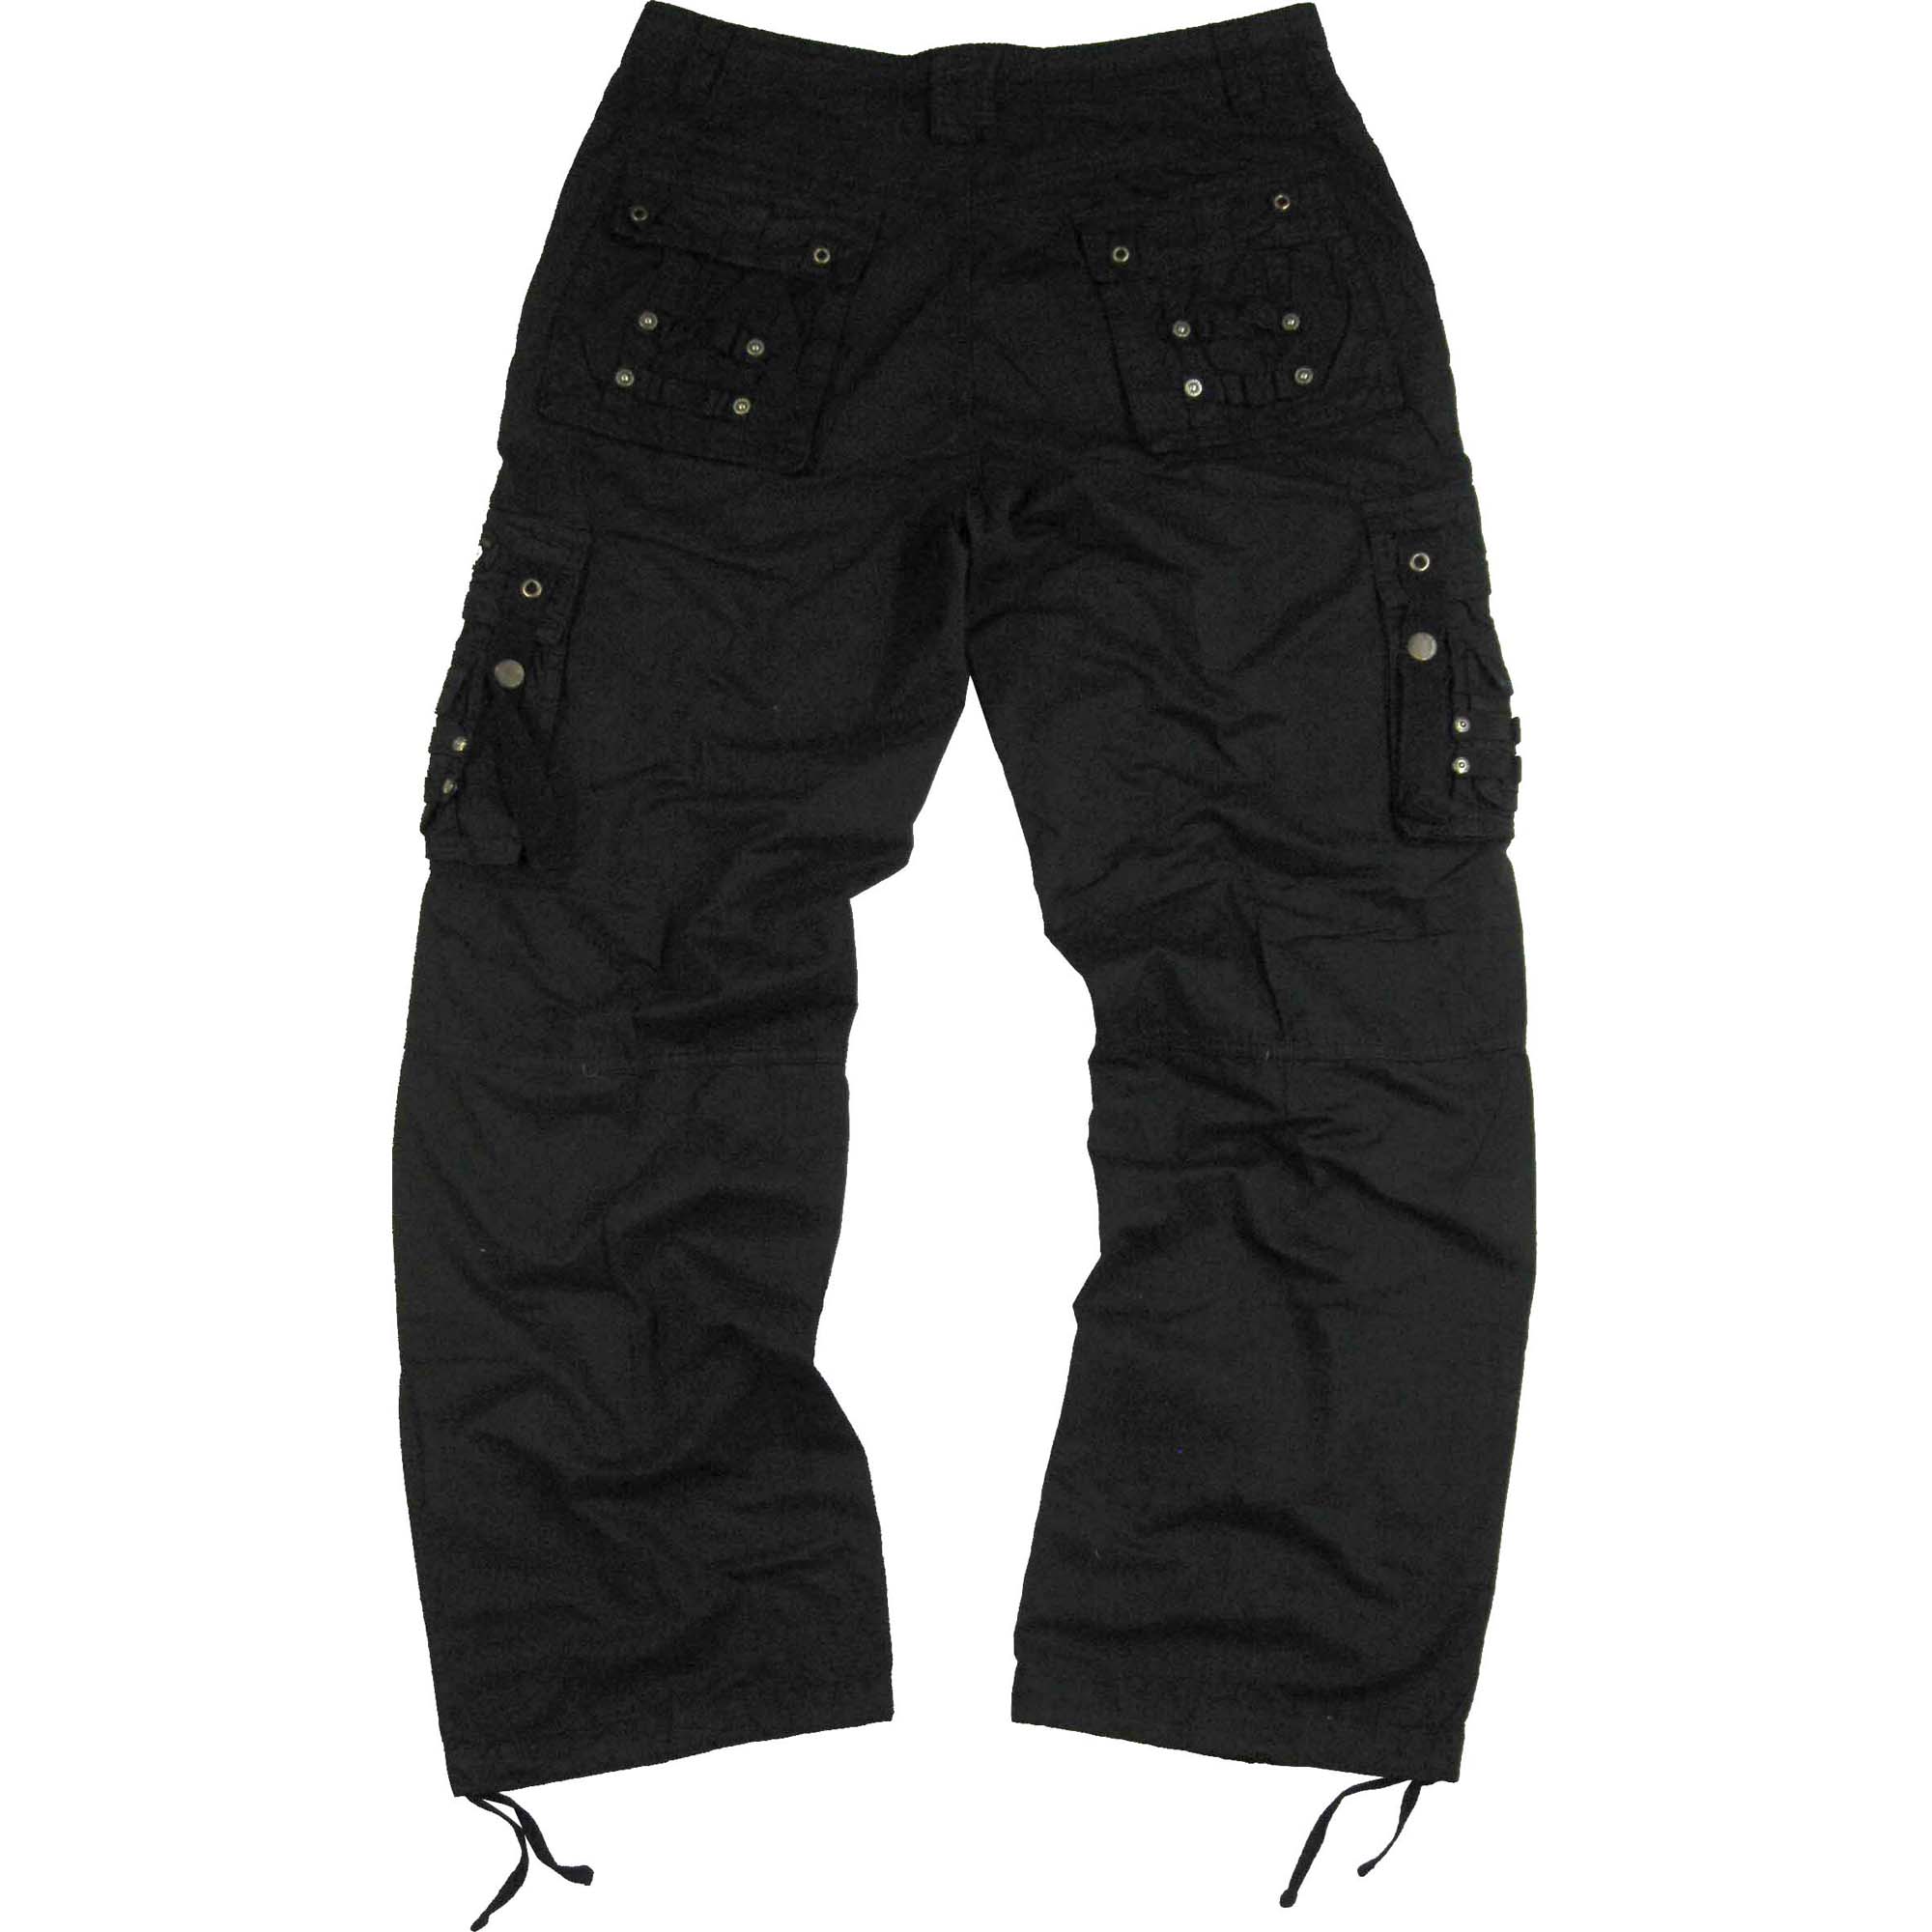 Men's Military Cargo Pants Black #12211 - Walmart.com